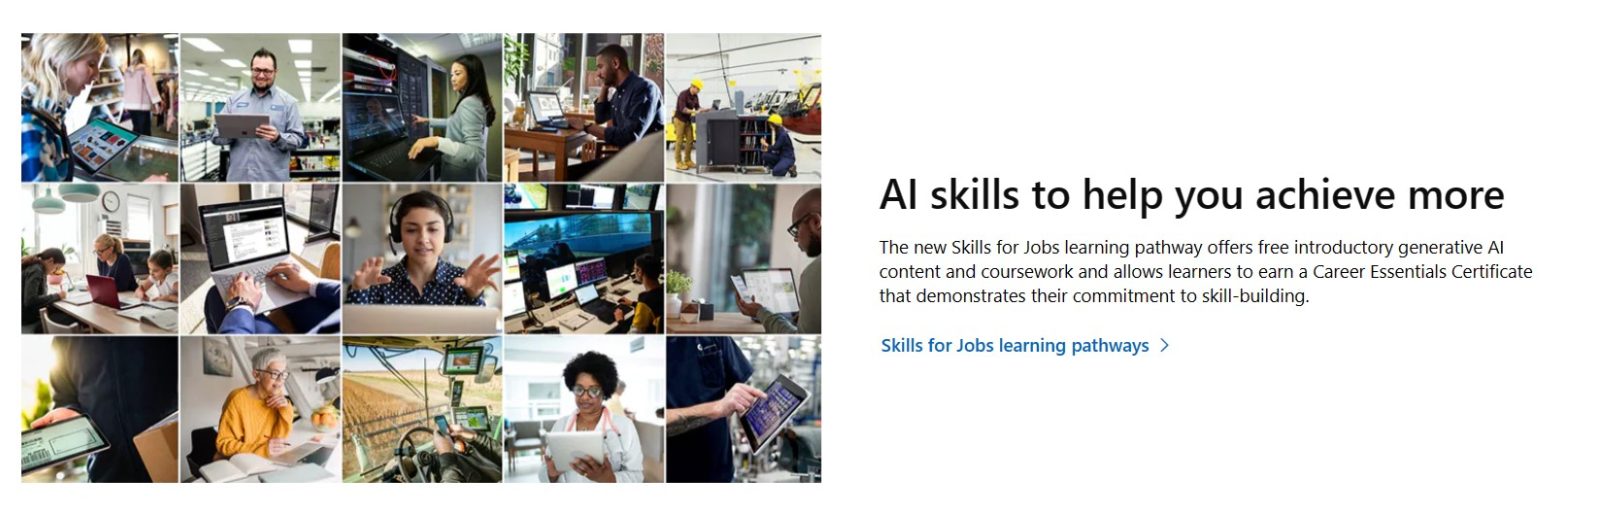 AI skills (źródło: www.microsoft.com)